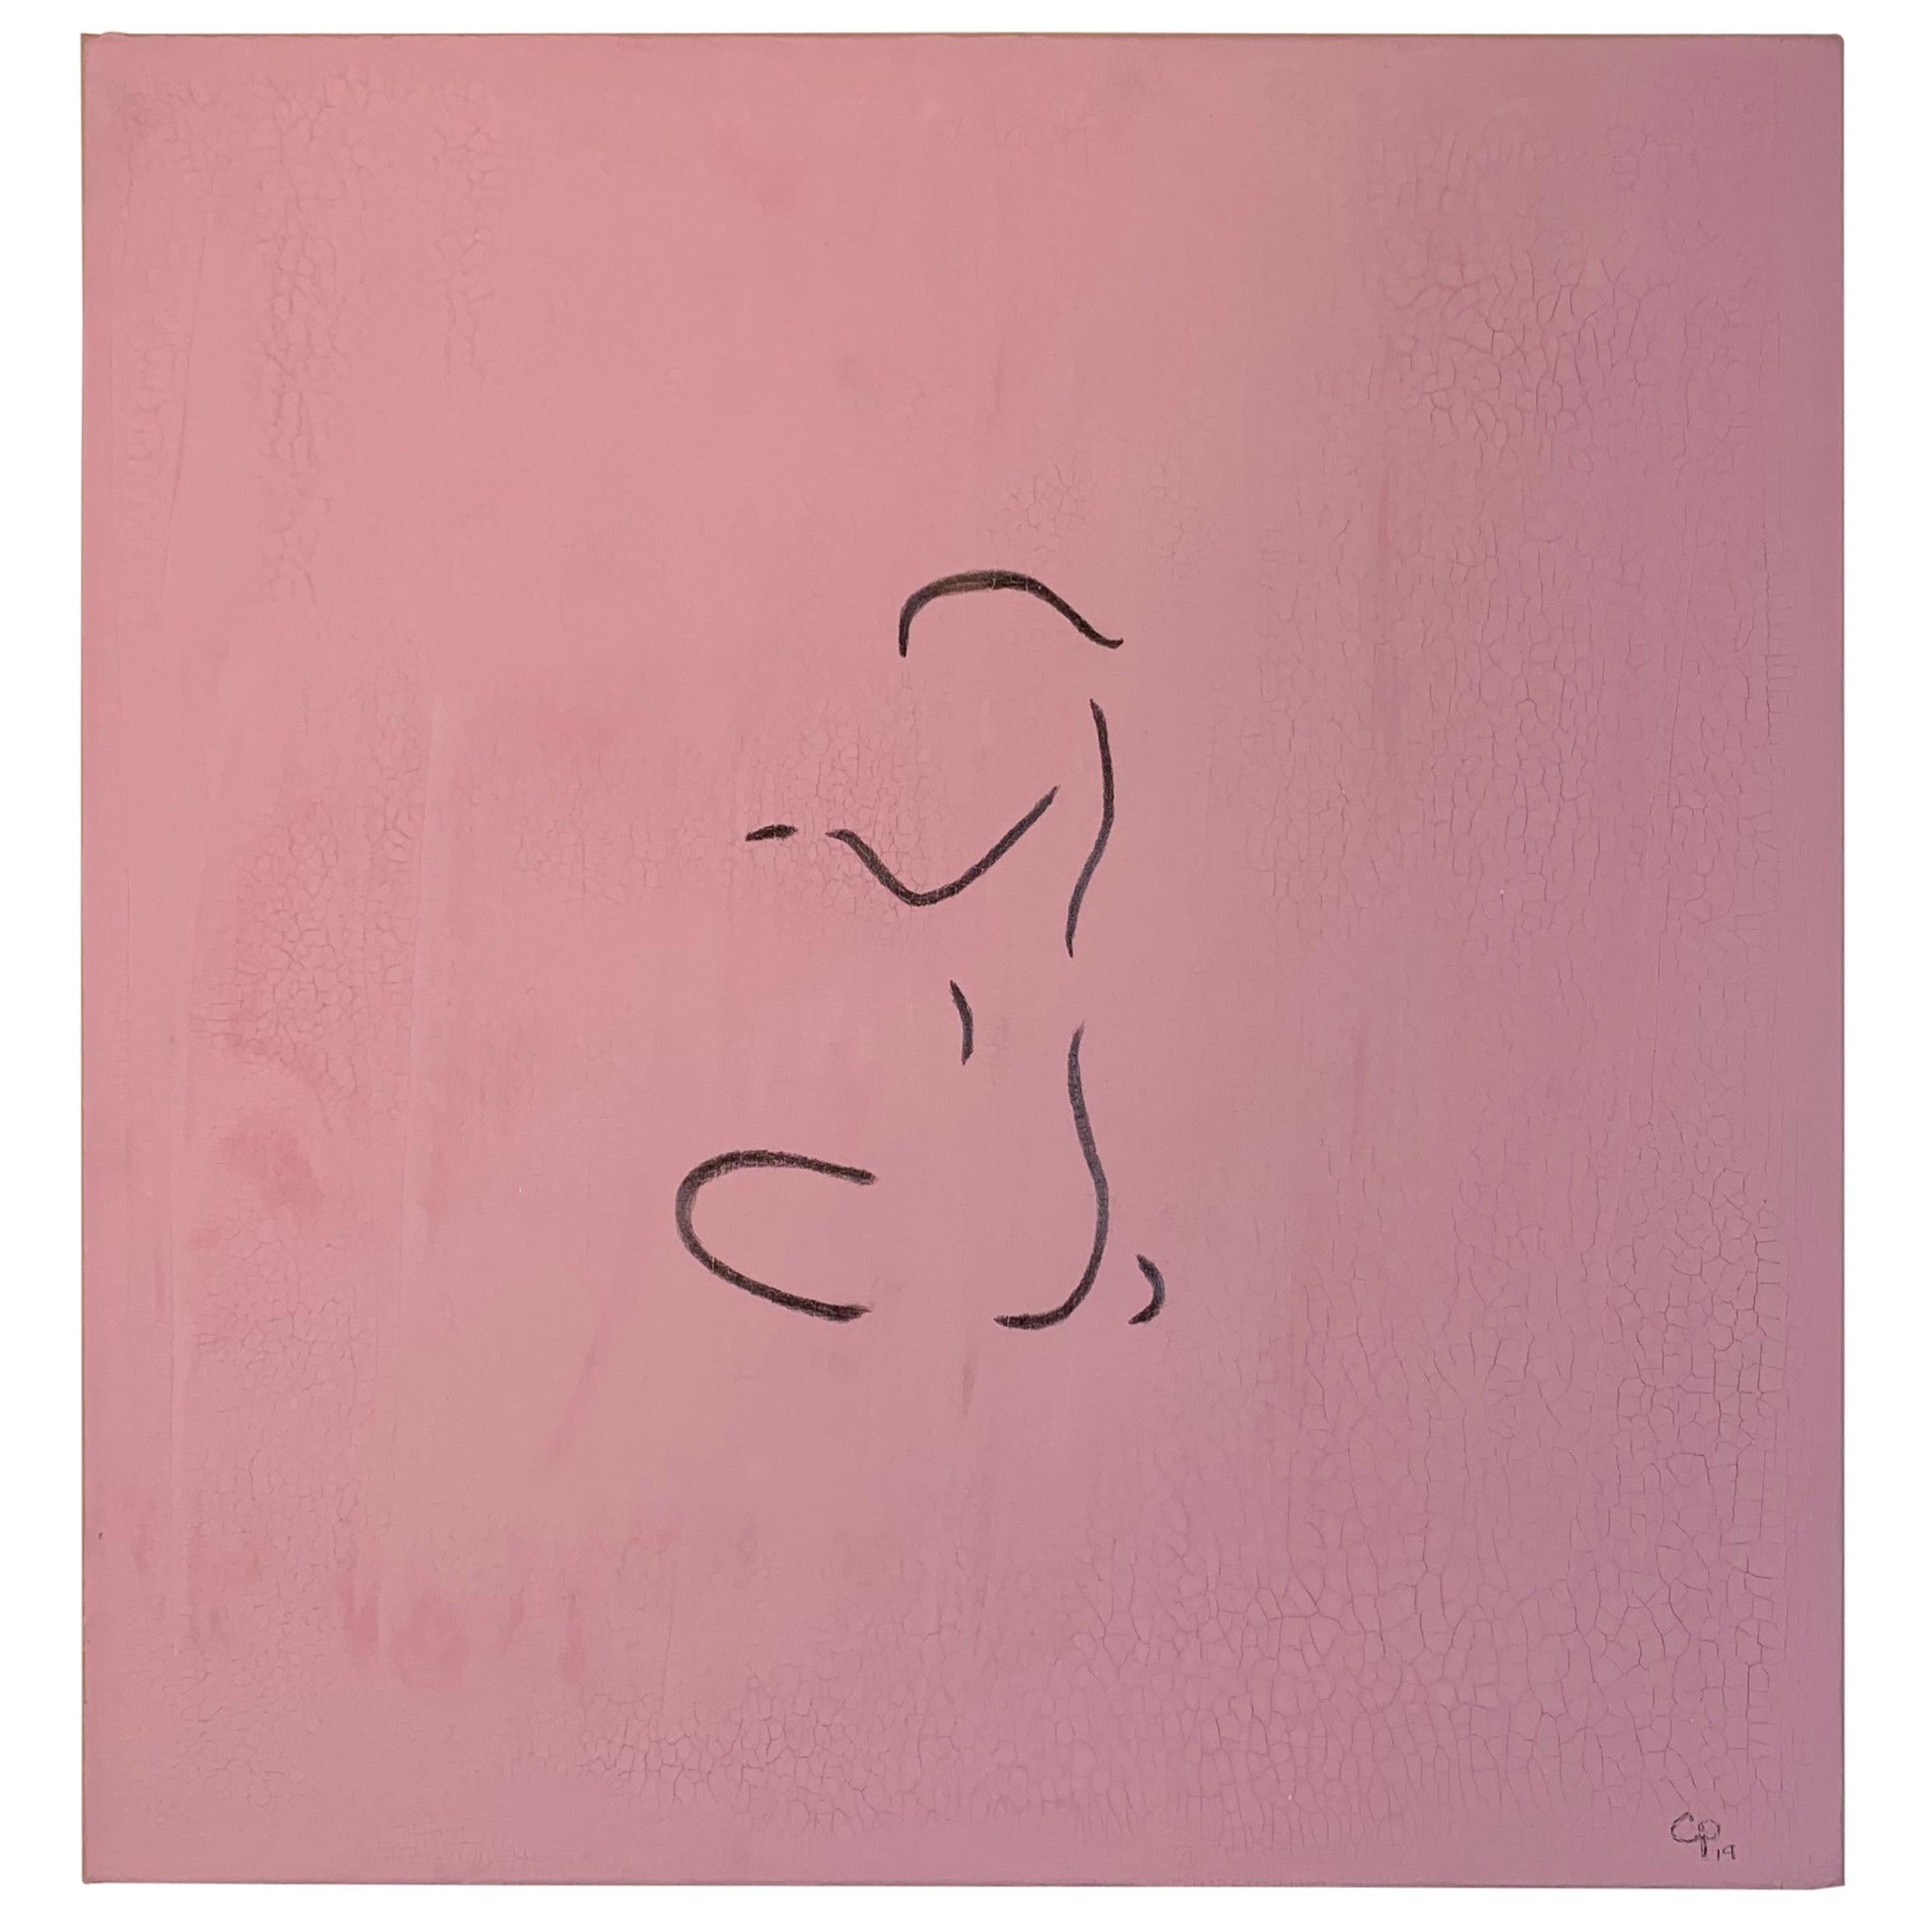 Carol Post, "Figure on Pink", Venetian Plaster and Graphite